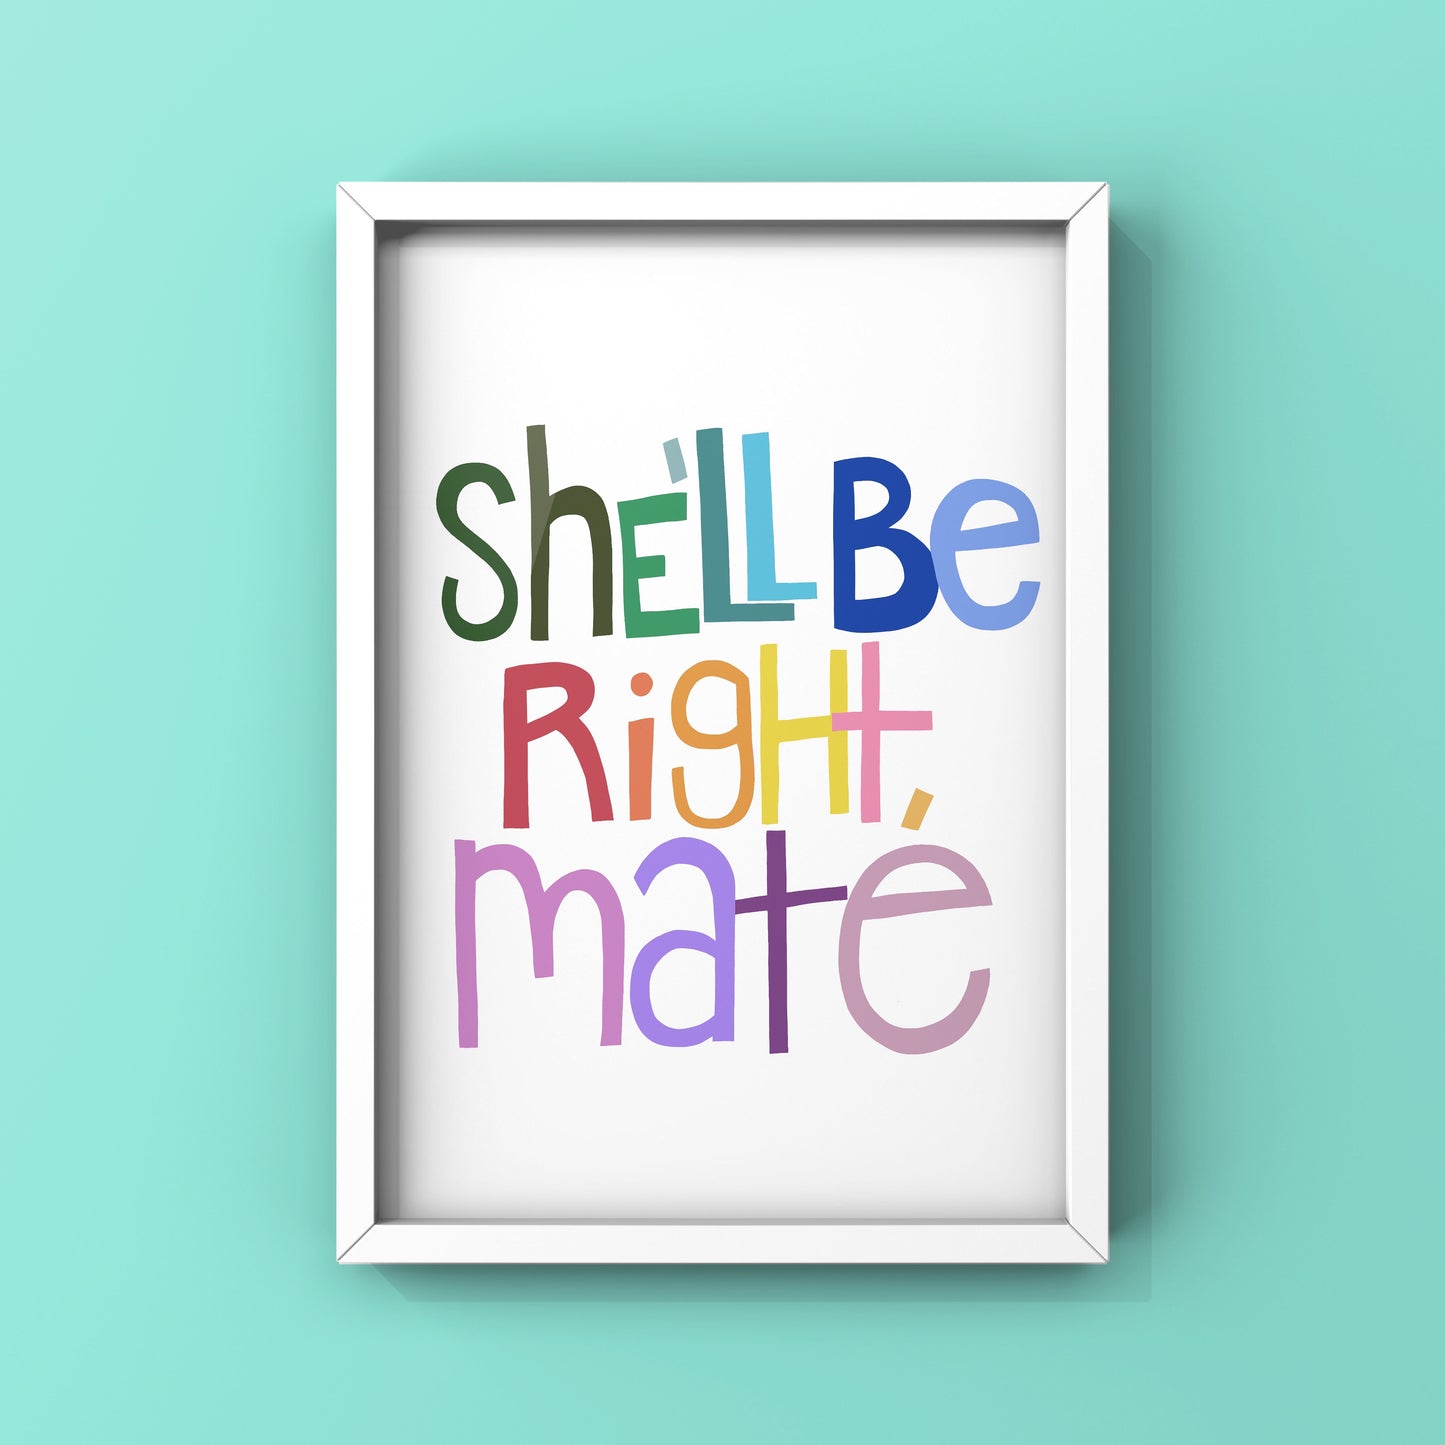 "She'll Be 'Right, Mate" | Fine Art Print